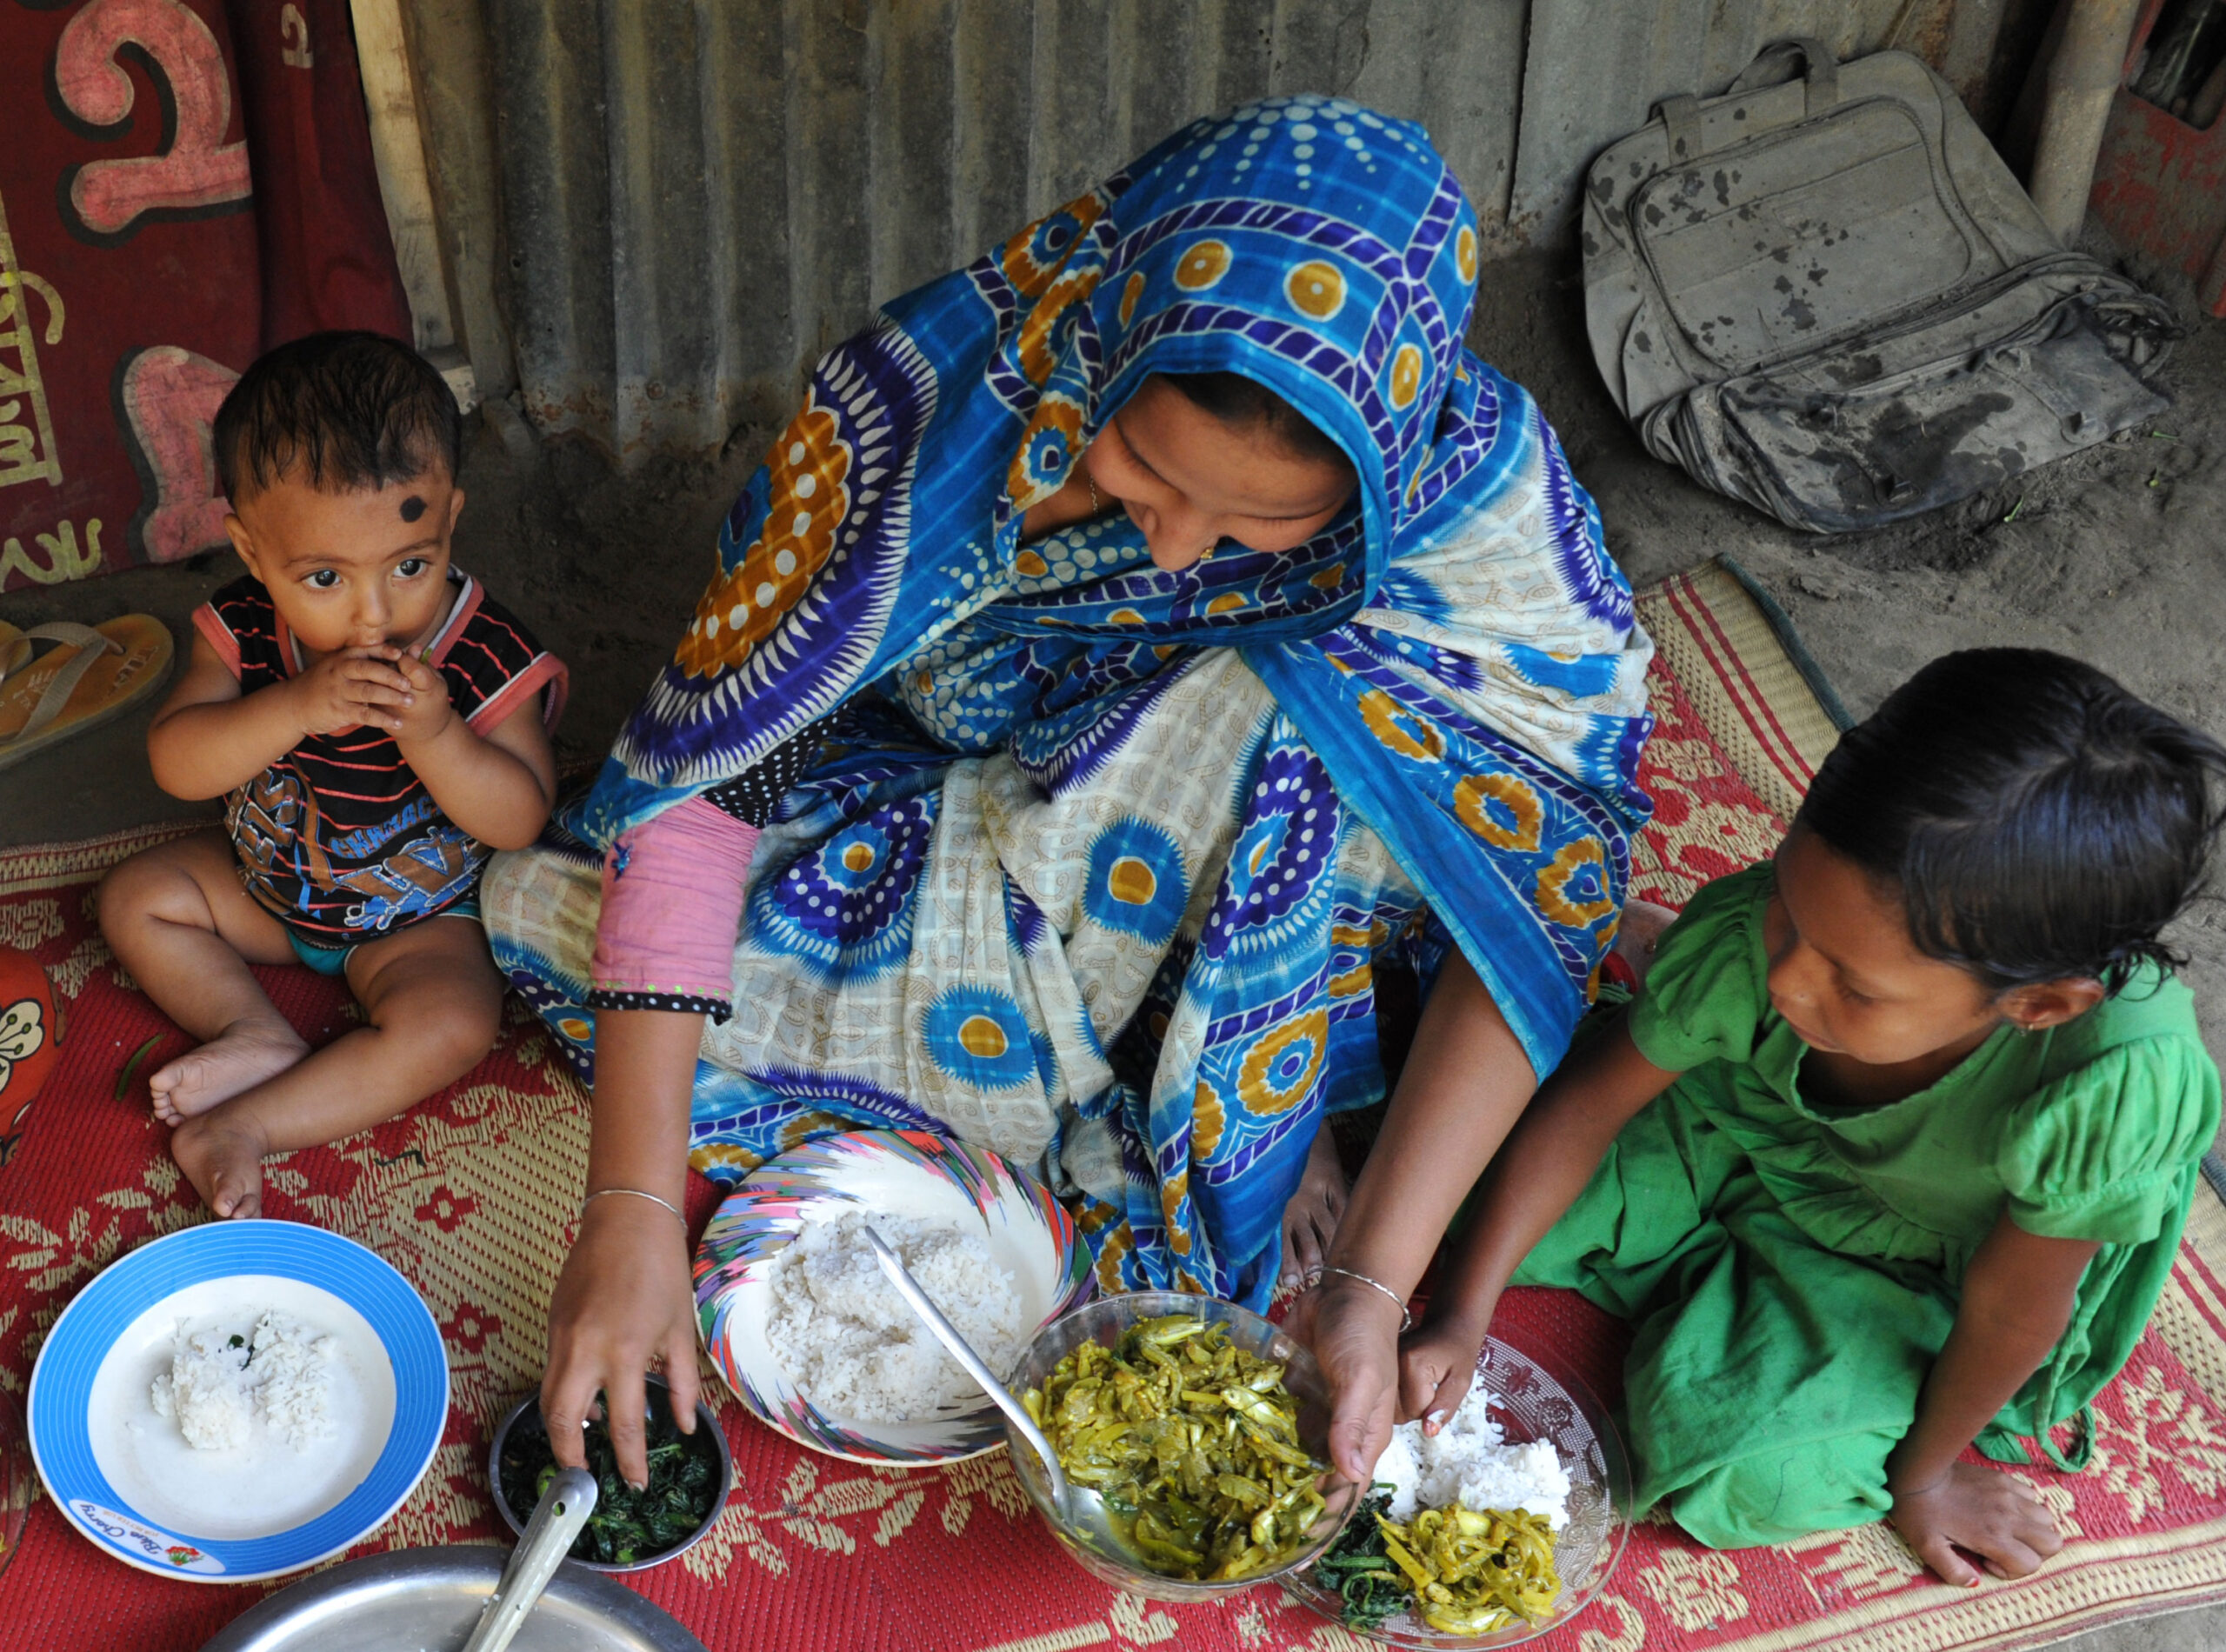 Bangladesh children seated eating